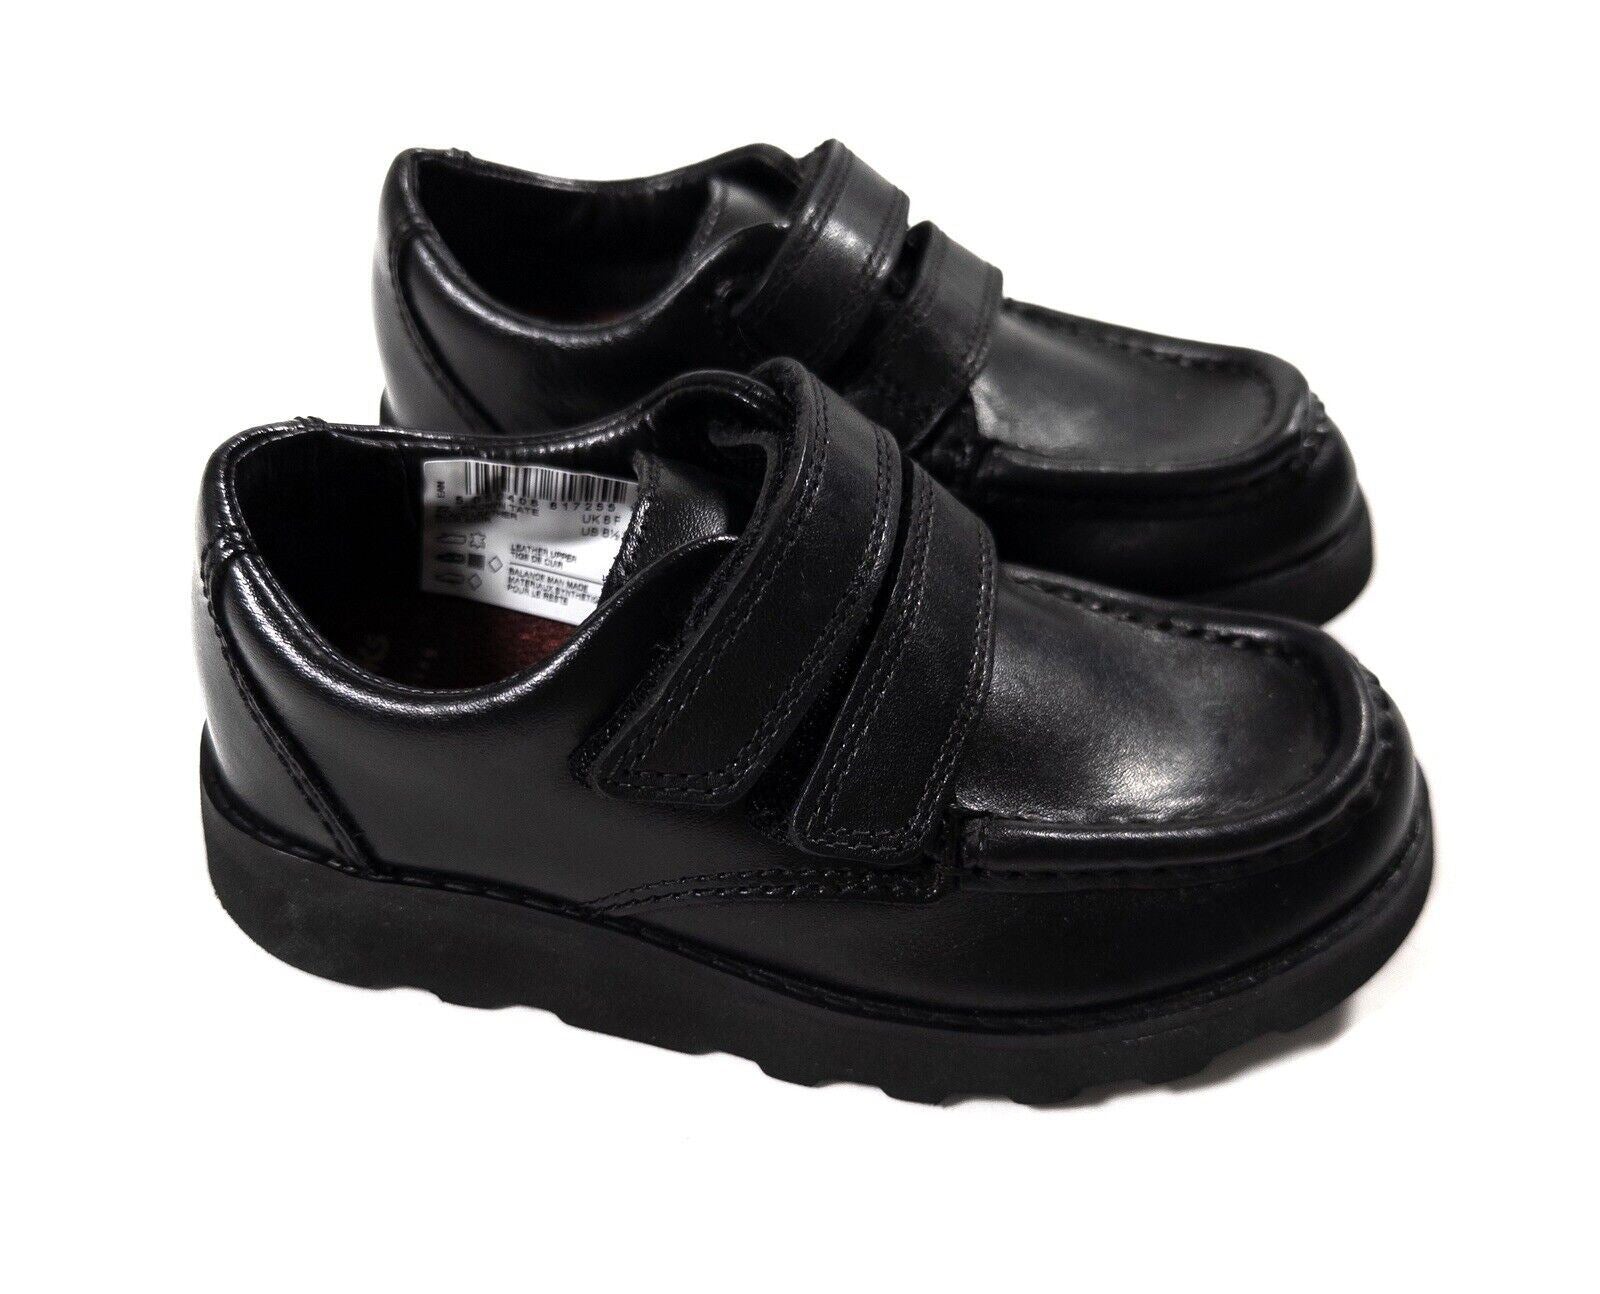 CLARKS Kids Boys Black Leather School Shoes Size UK 8 F